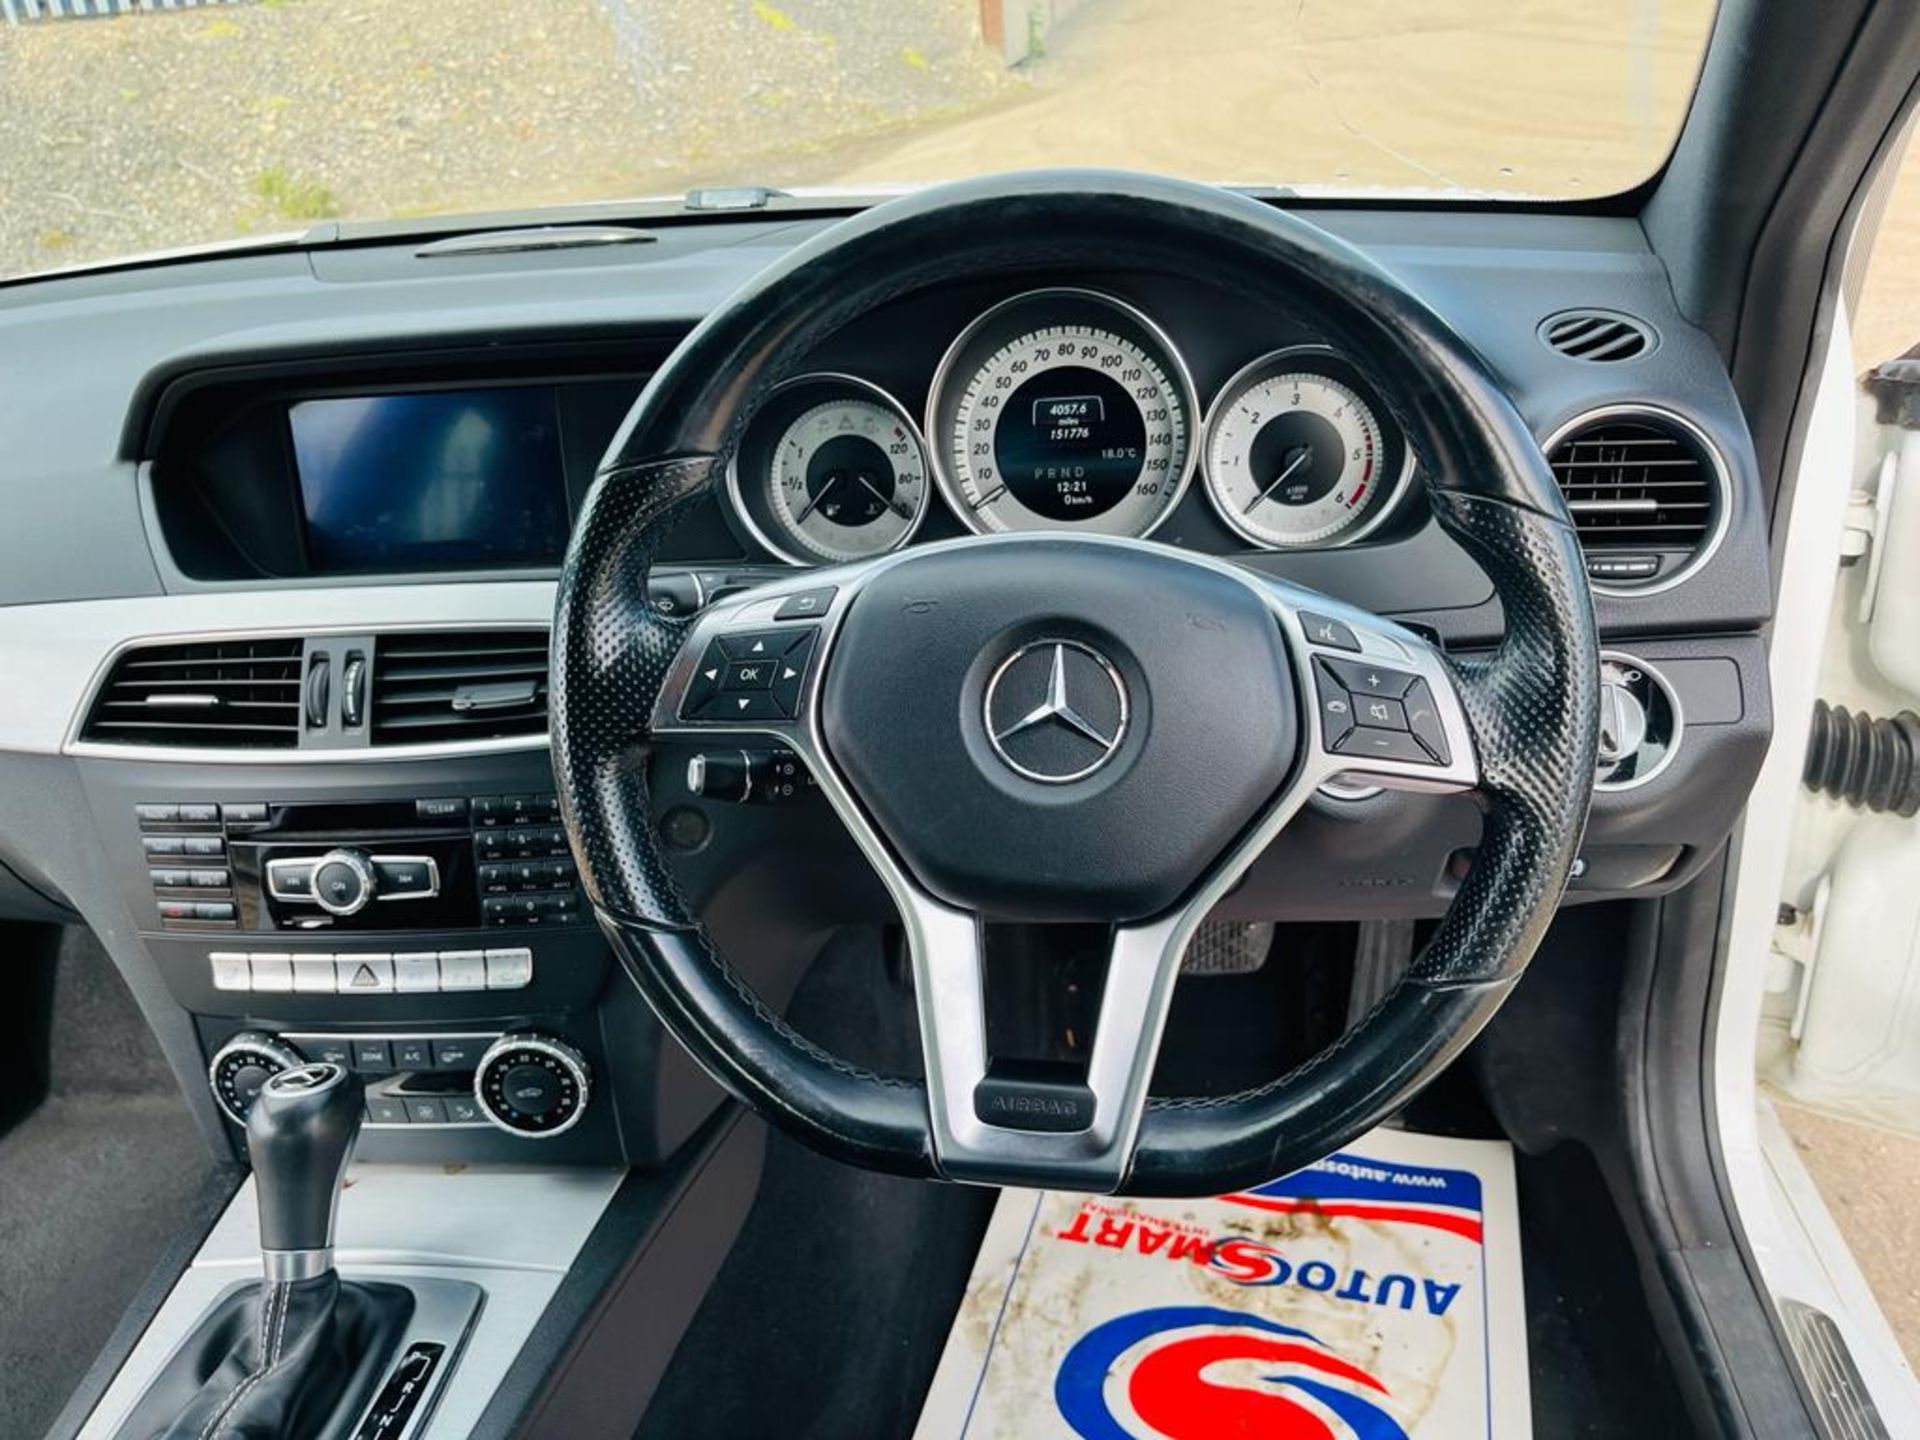 ** ON SALE ** Mercedes-Benz C220 2.1 CDI AMG Sport Edition Coupe 2015 (15 Reg) - No Vat - Sat Nav - Image 16 of 25